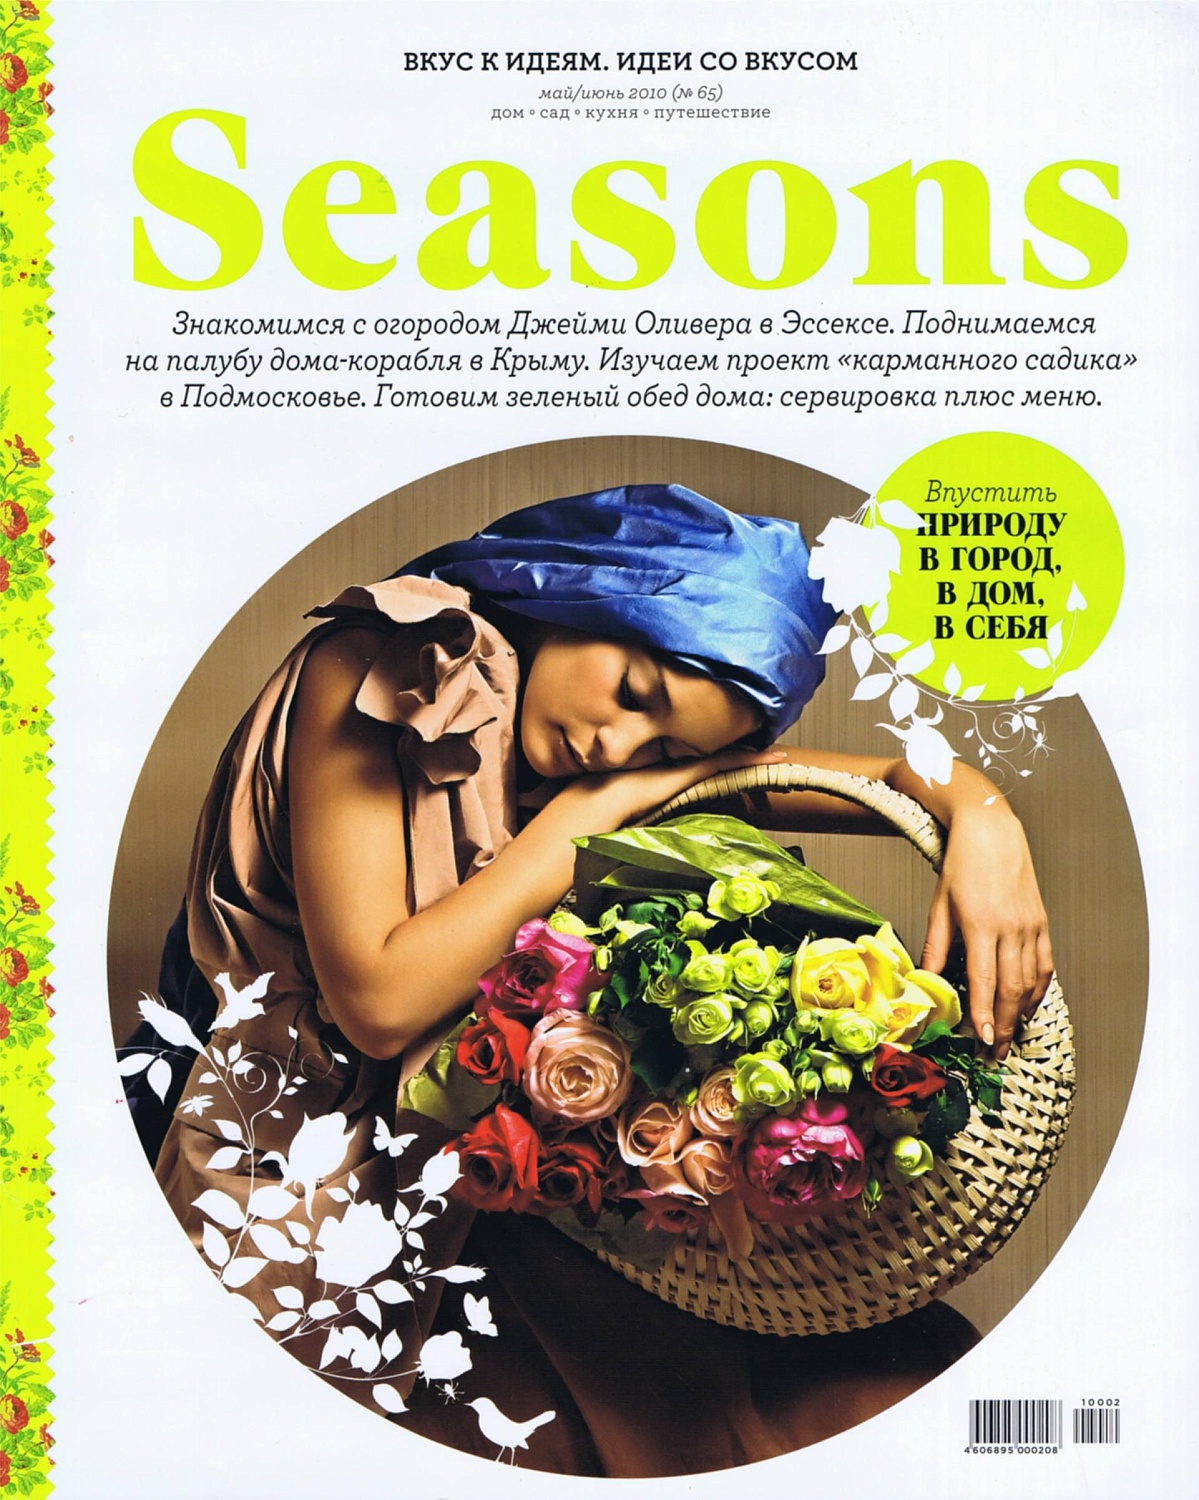 Журнал "Seasons" - "Сад в кармане" 2010